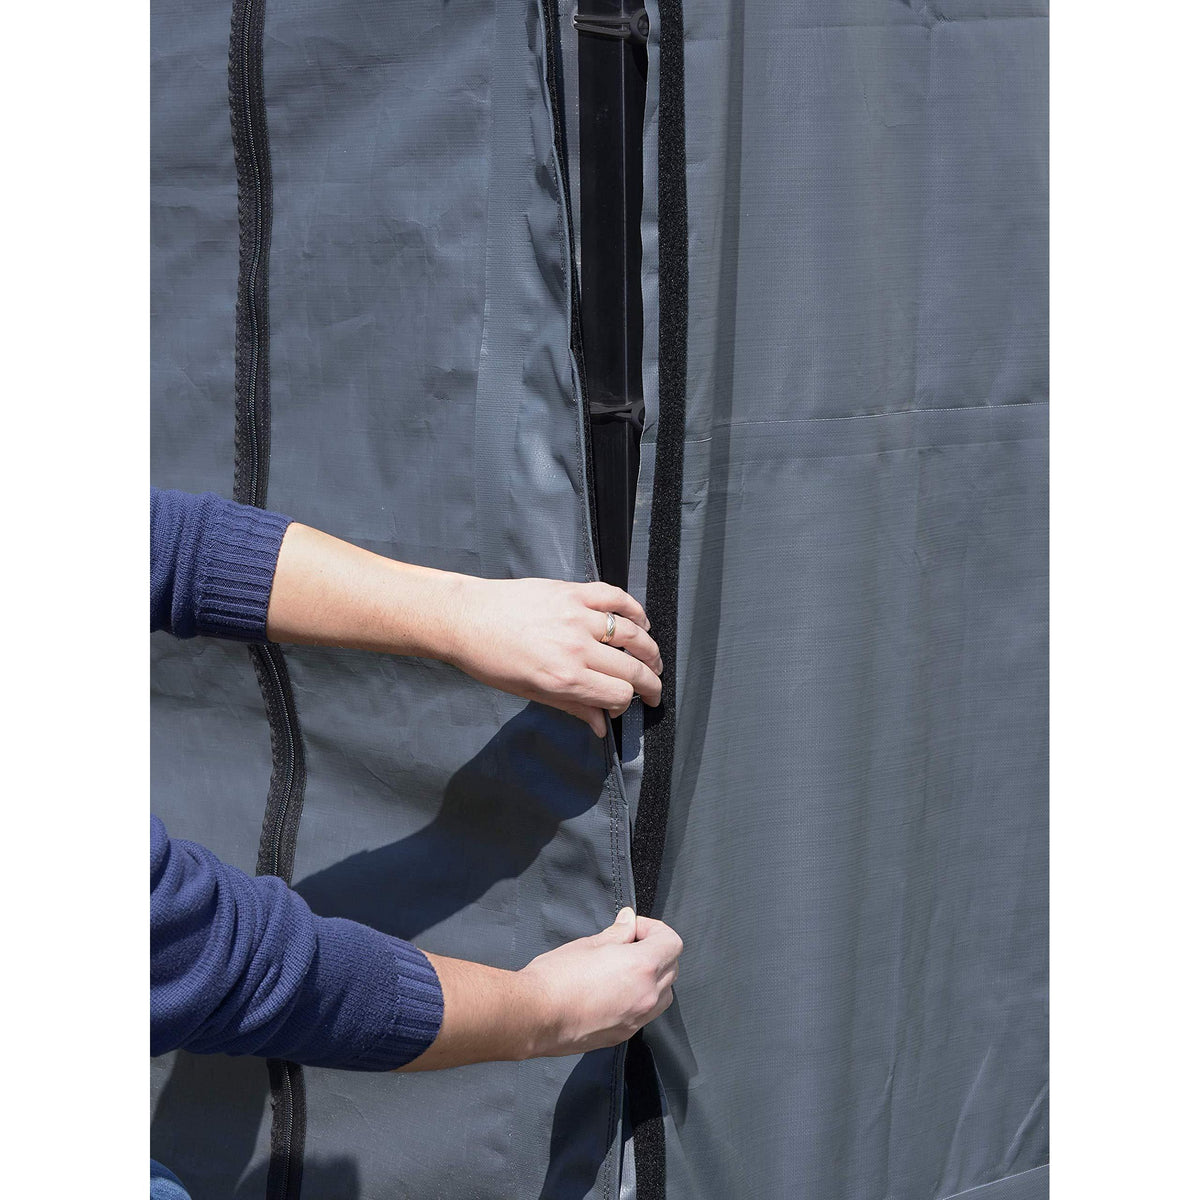 Arrow Fabric Enclosure Kit with UV Treated Cover for 10 x 15-Feet Carports, 10' x 15'